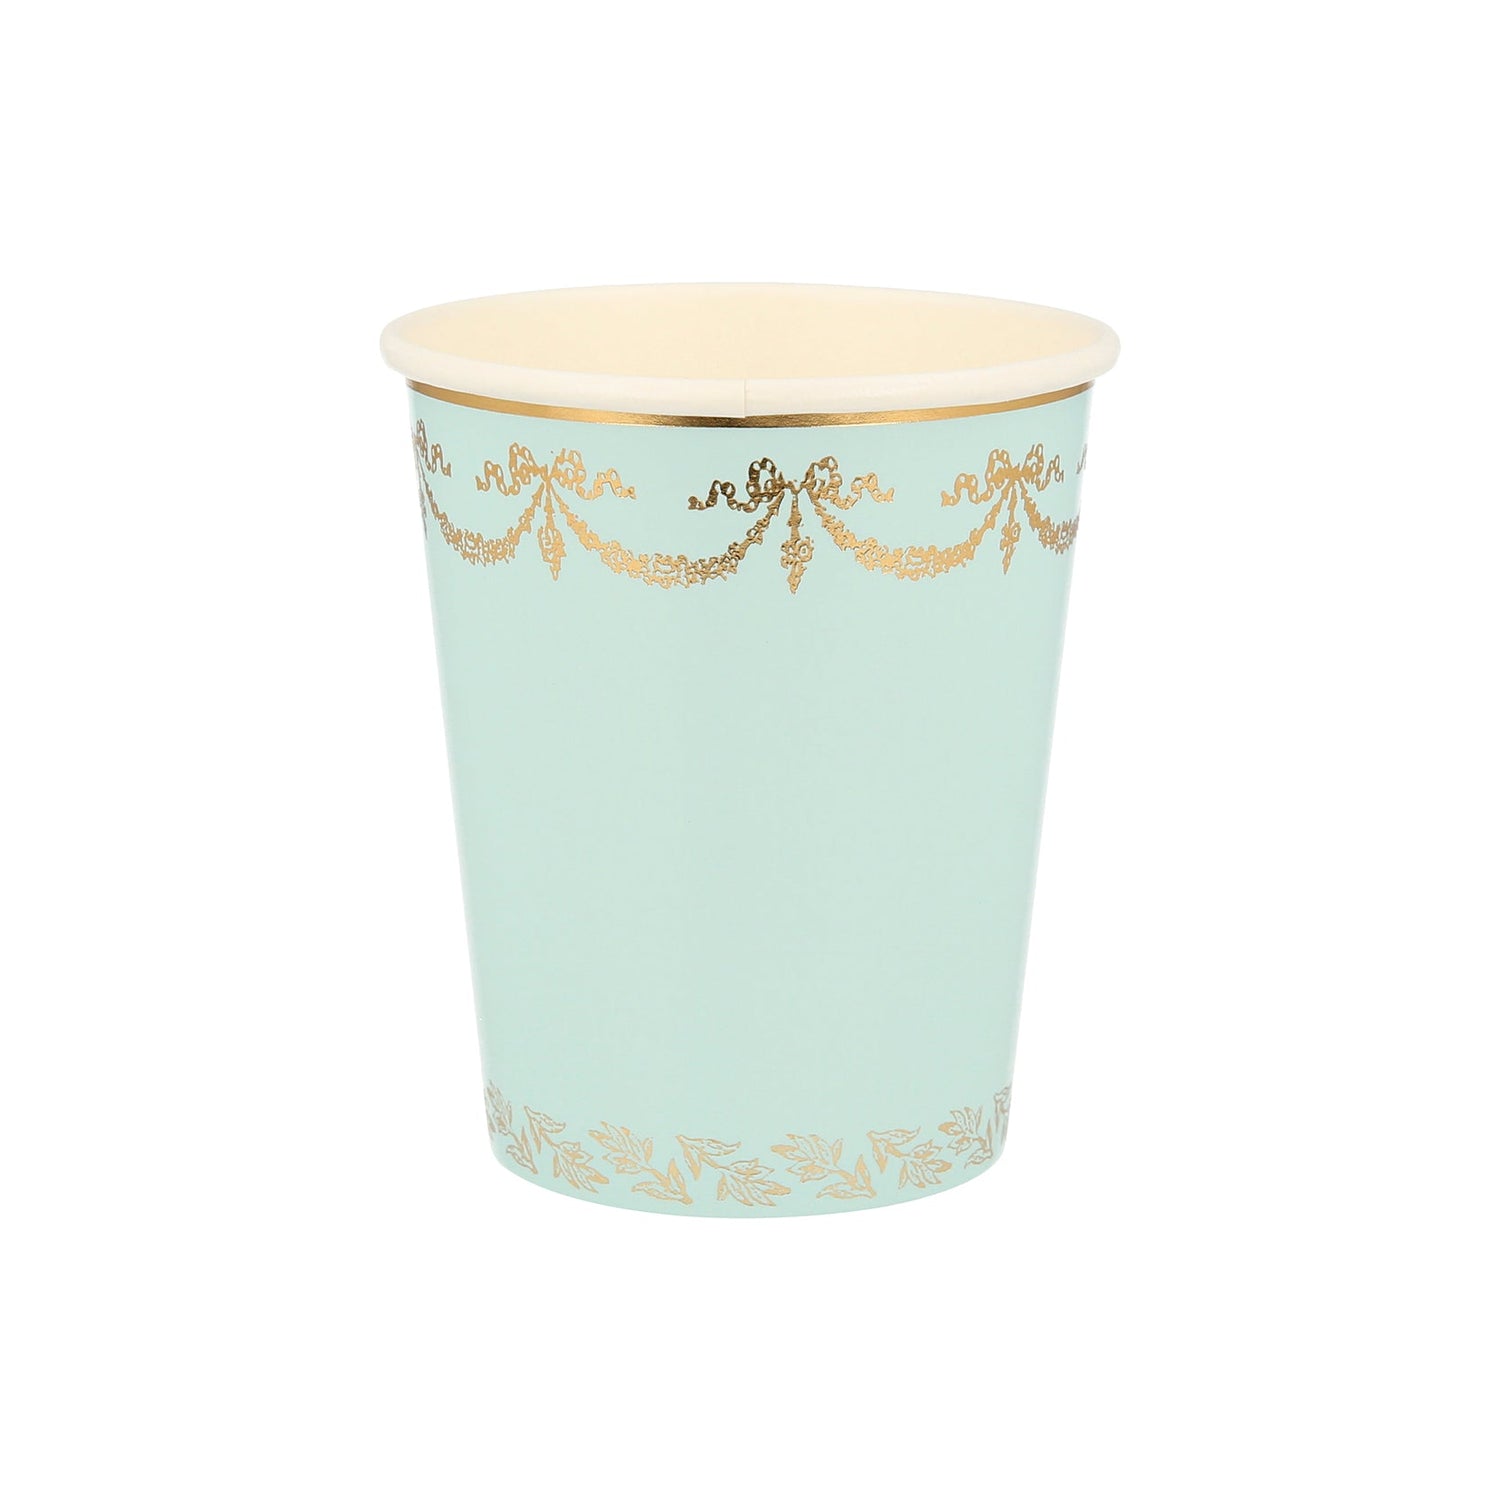 A mint green Ladurée Paris cup with gold trim perfect for Meri Meri collaborations.